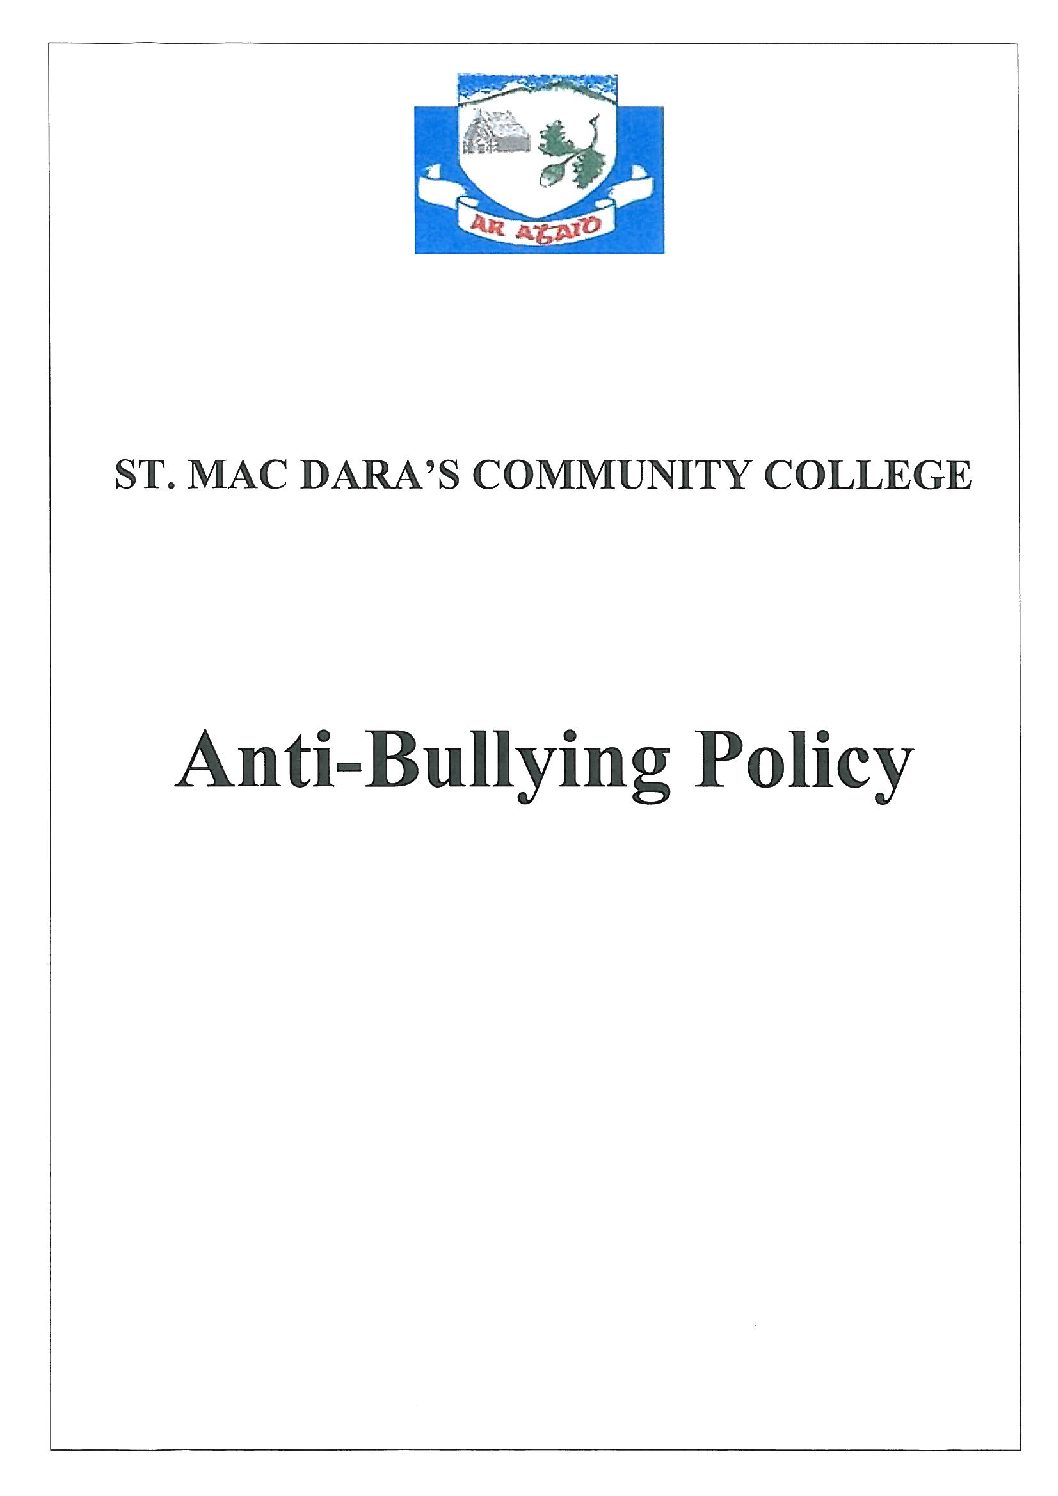 Anti-Bullying Policy